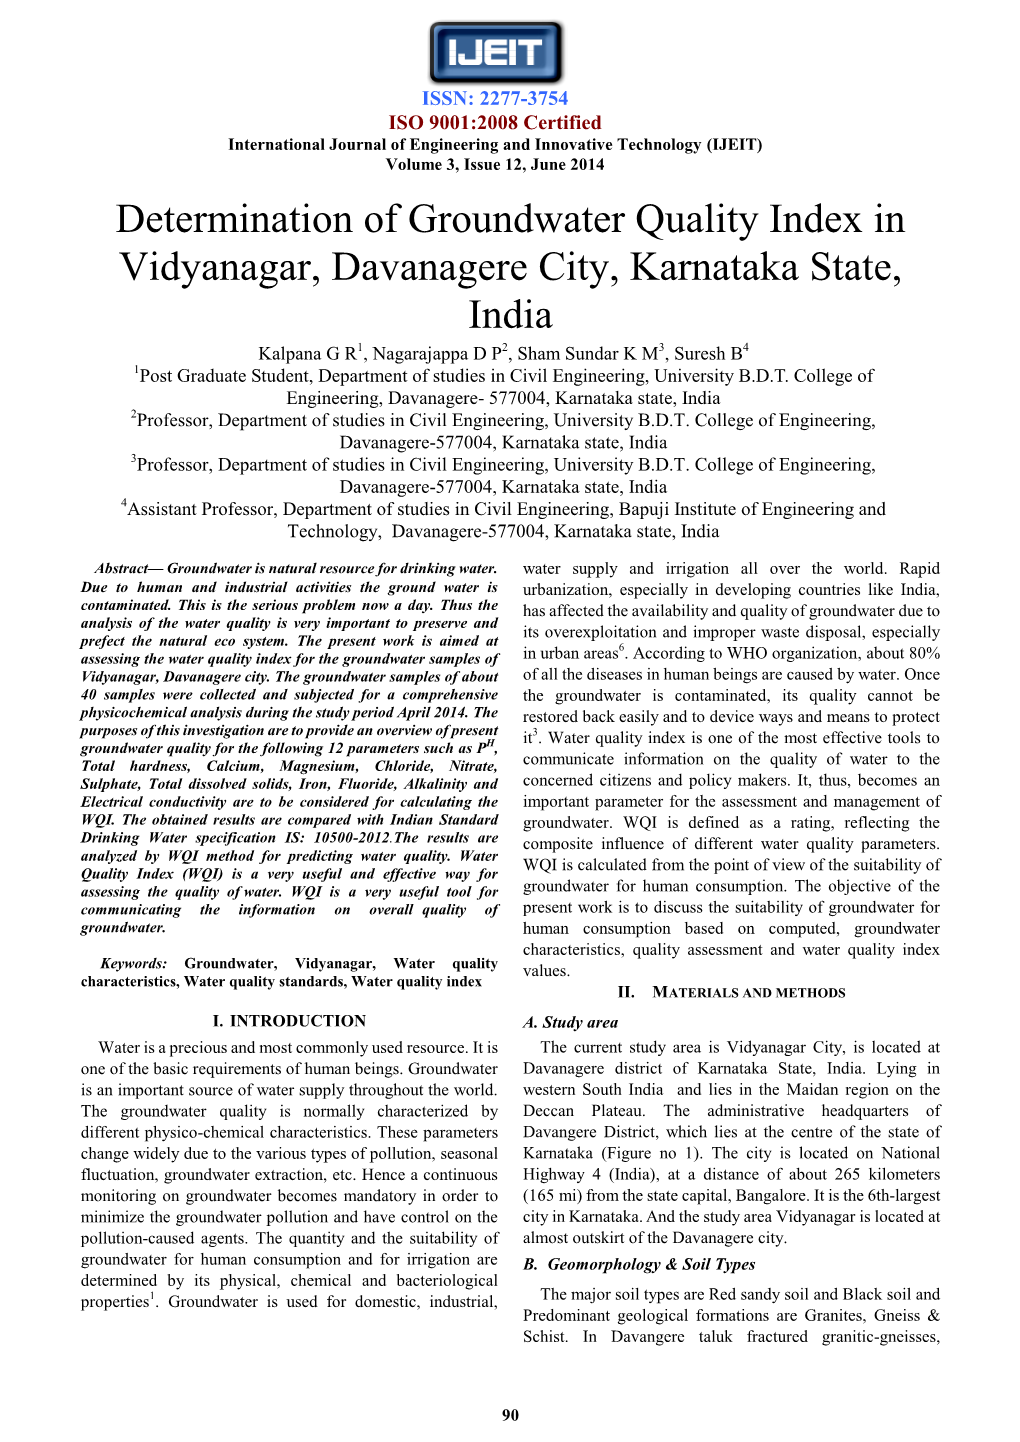 Determination of Groundwater Quality Index in Vidyanagar, Davanagere City, Karnataka State, India